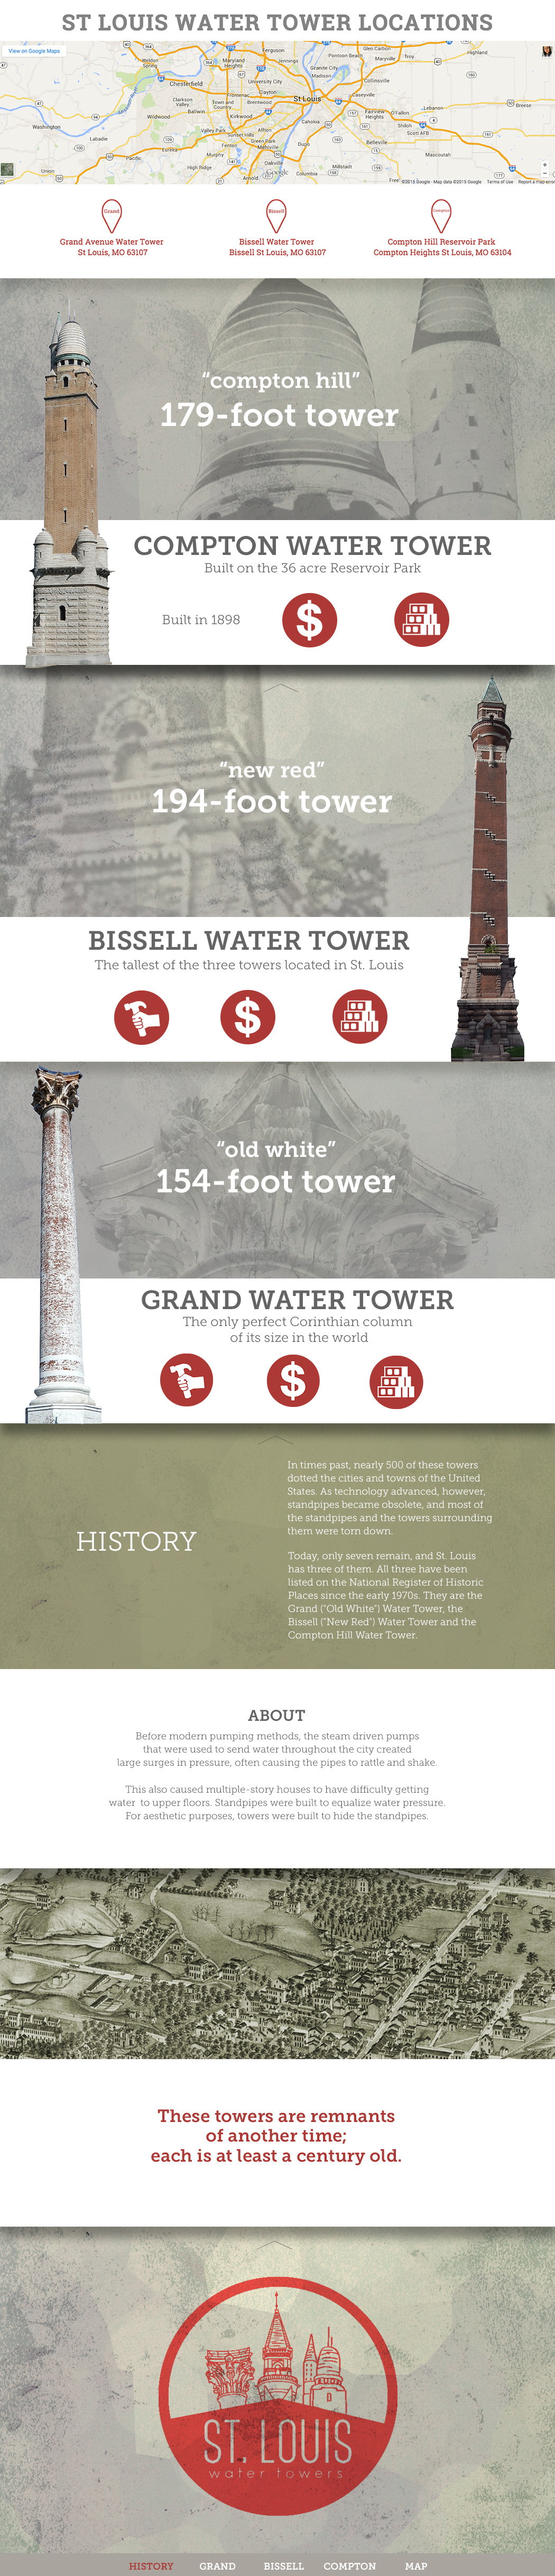 infographic prallax water towers st louis websites history MIssouri design